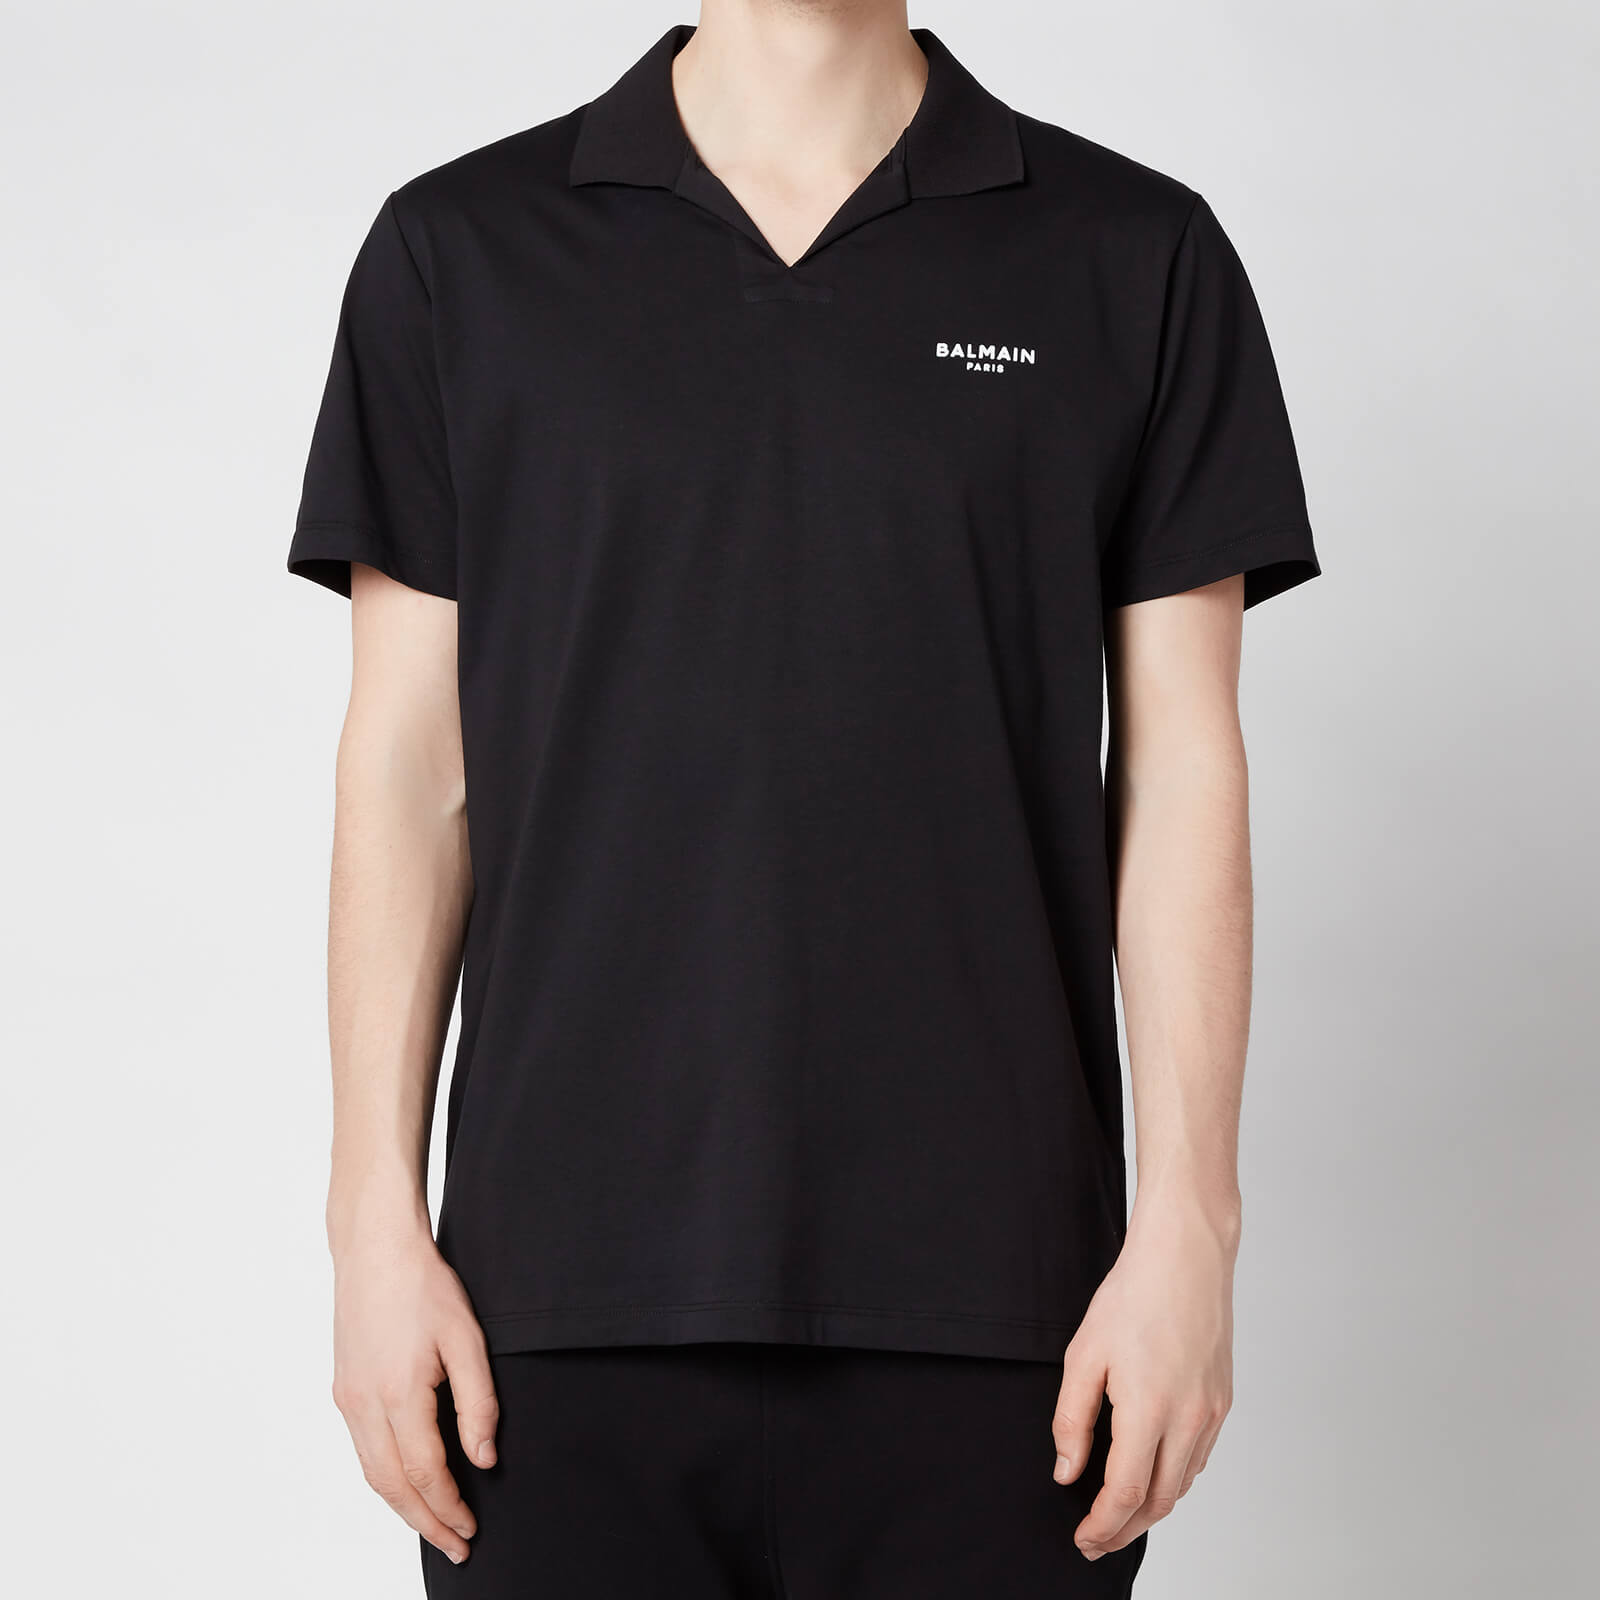 Balmain Men's Eco Design Flock Polo Shirt - Black/White - M